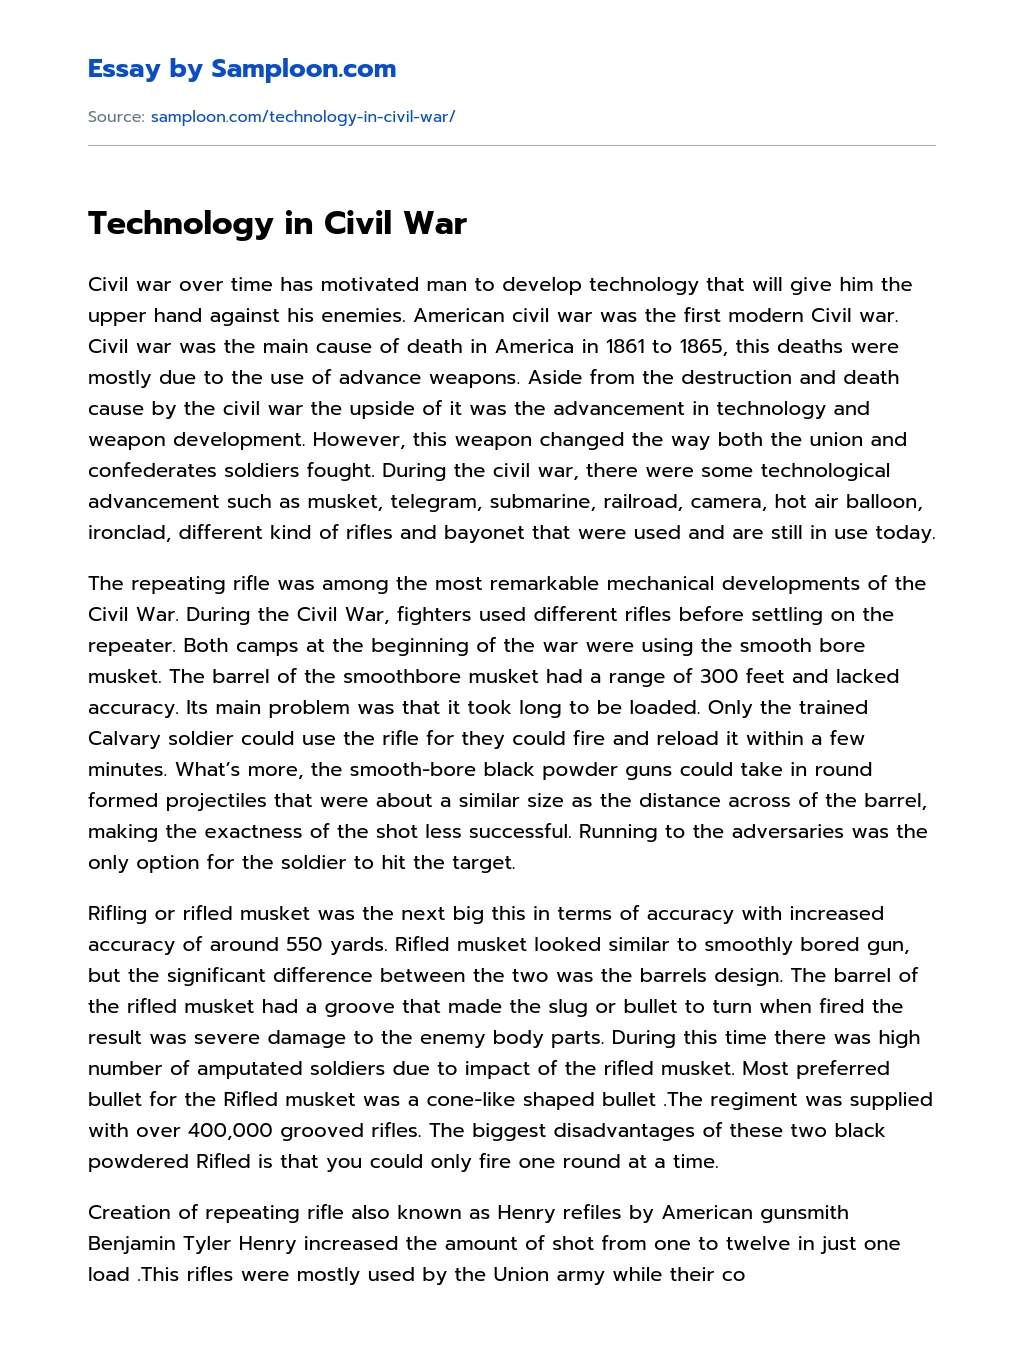 Technology in Civil War essay